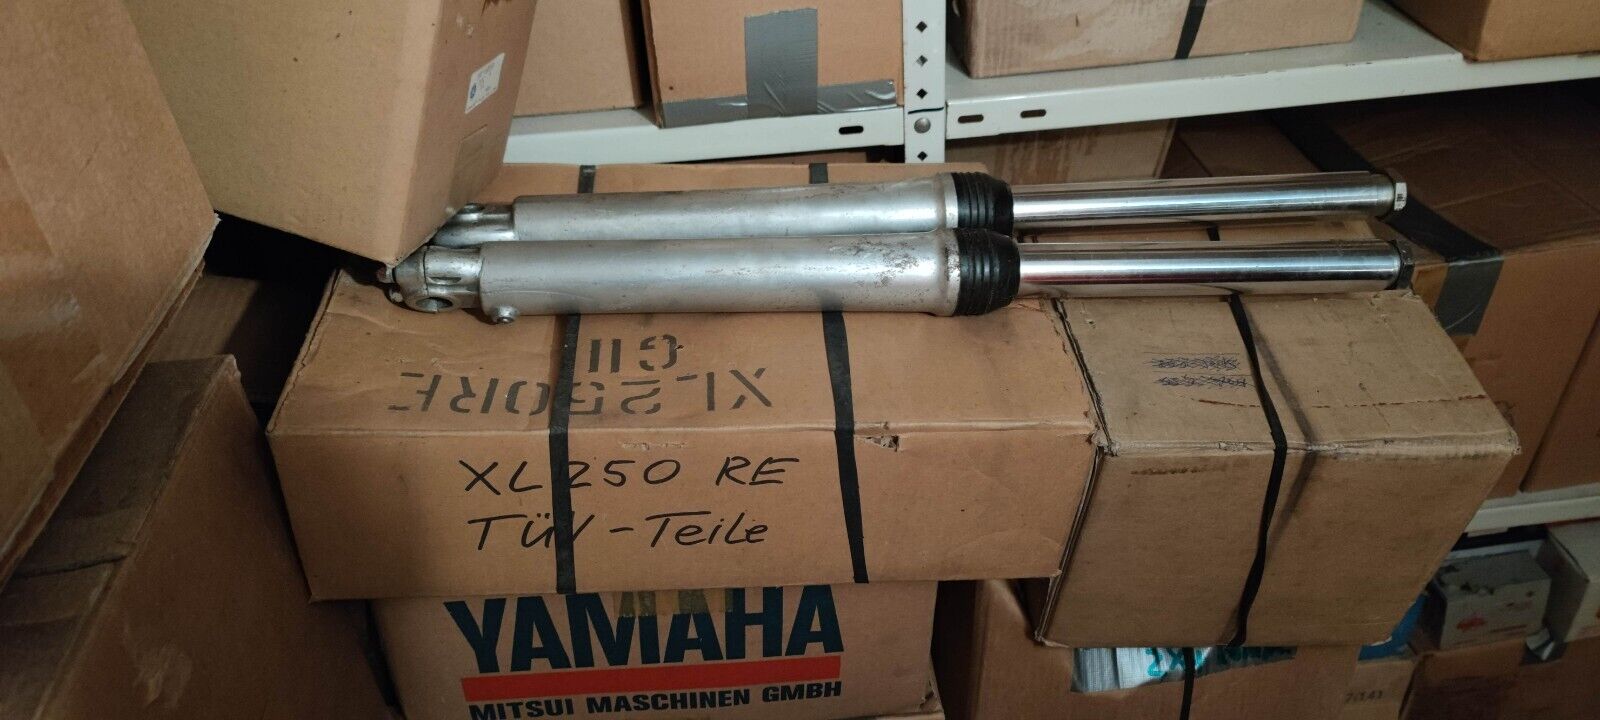 NOS Ersatzteile parts Yamaha TZR250 2MA 1x cylinder Zylinder Kit 1KT 11311 70 9